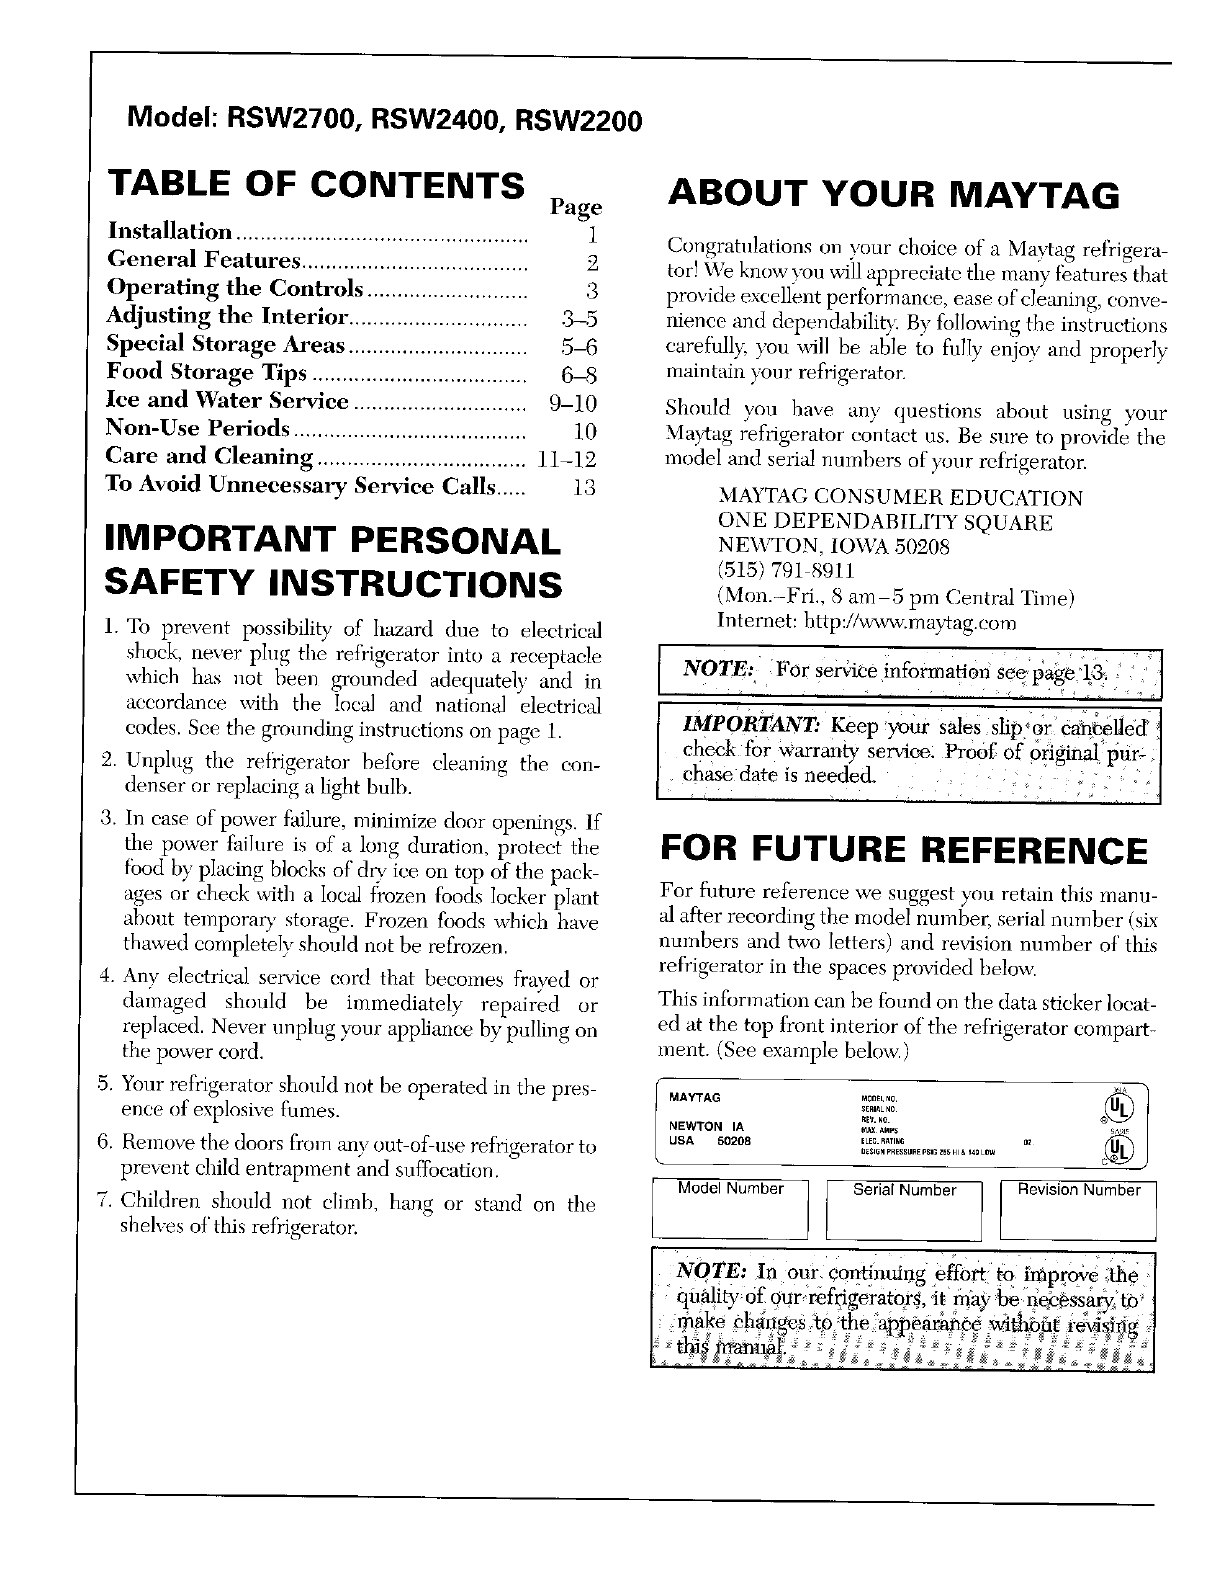 Maytag refrigerator maintenance manual